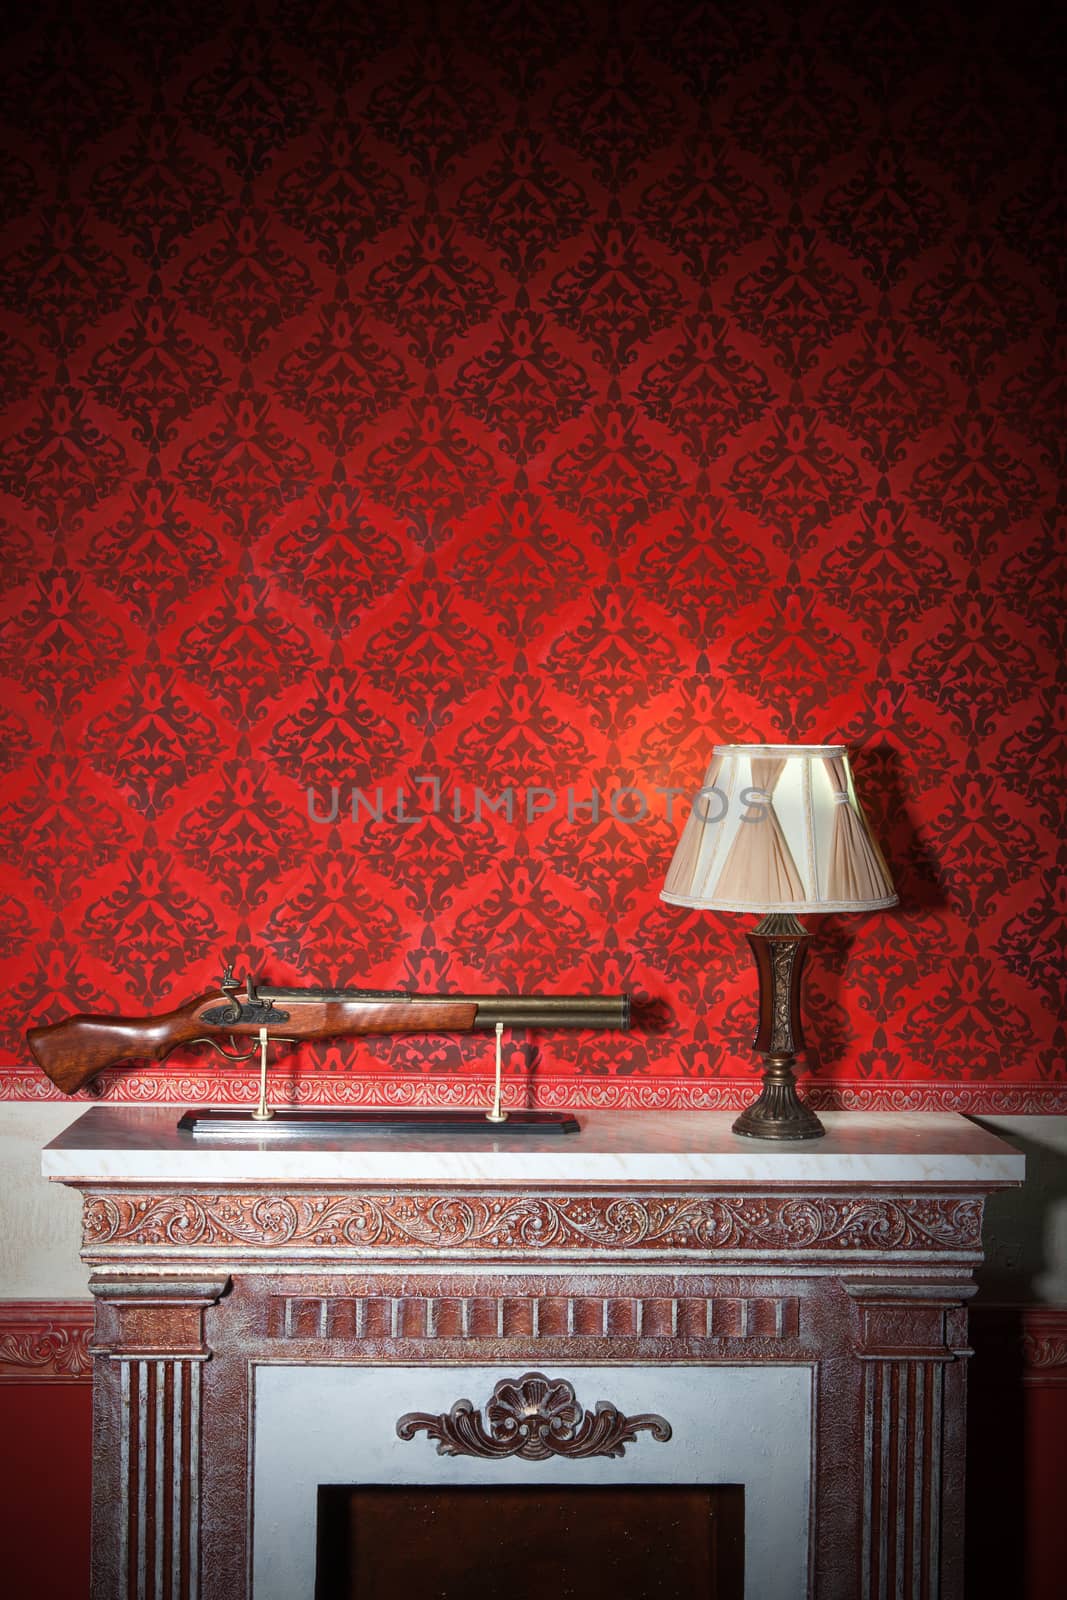 Vintage room interior toned image studio shooting